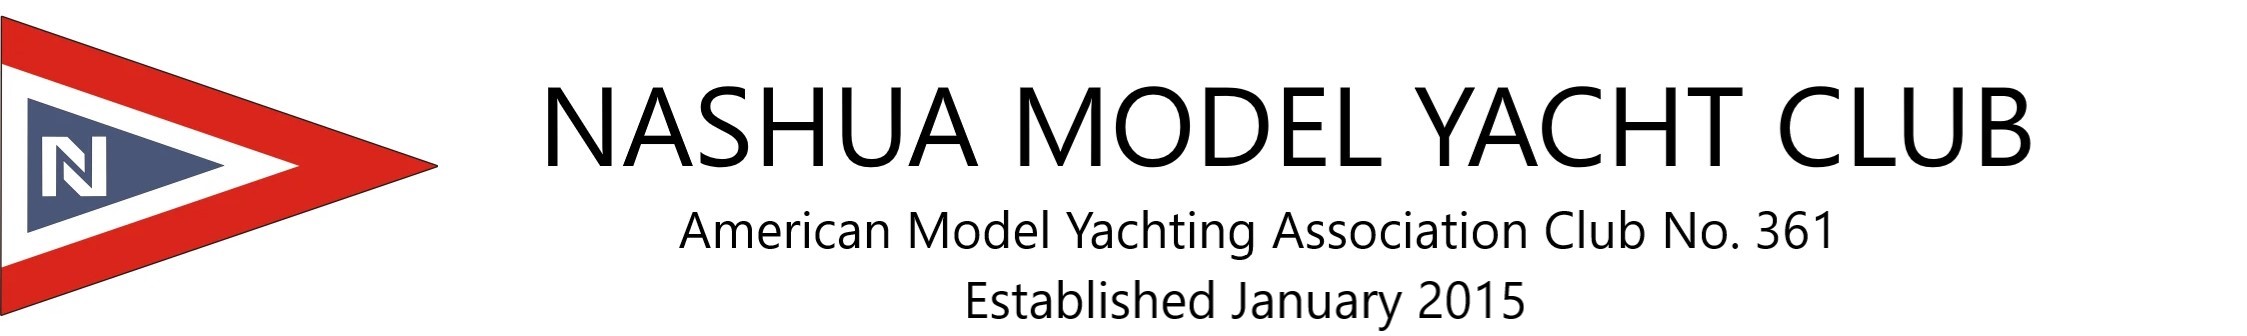 model yacht racing near me